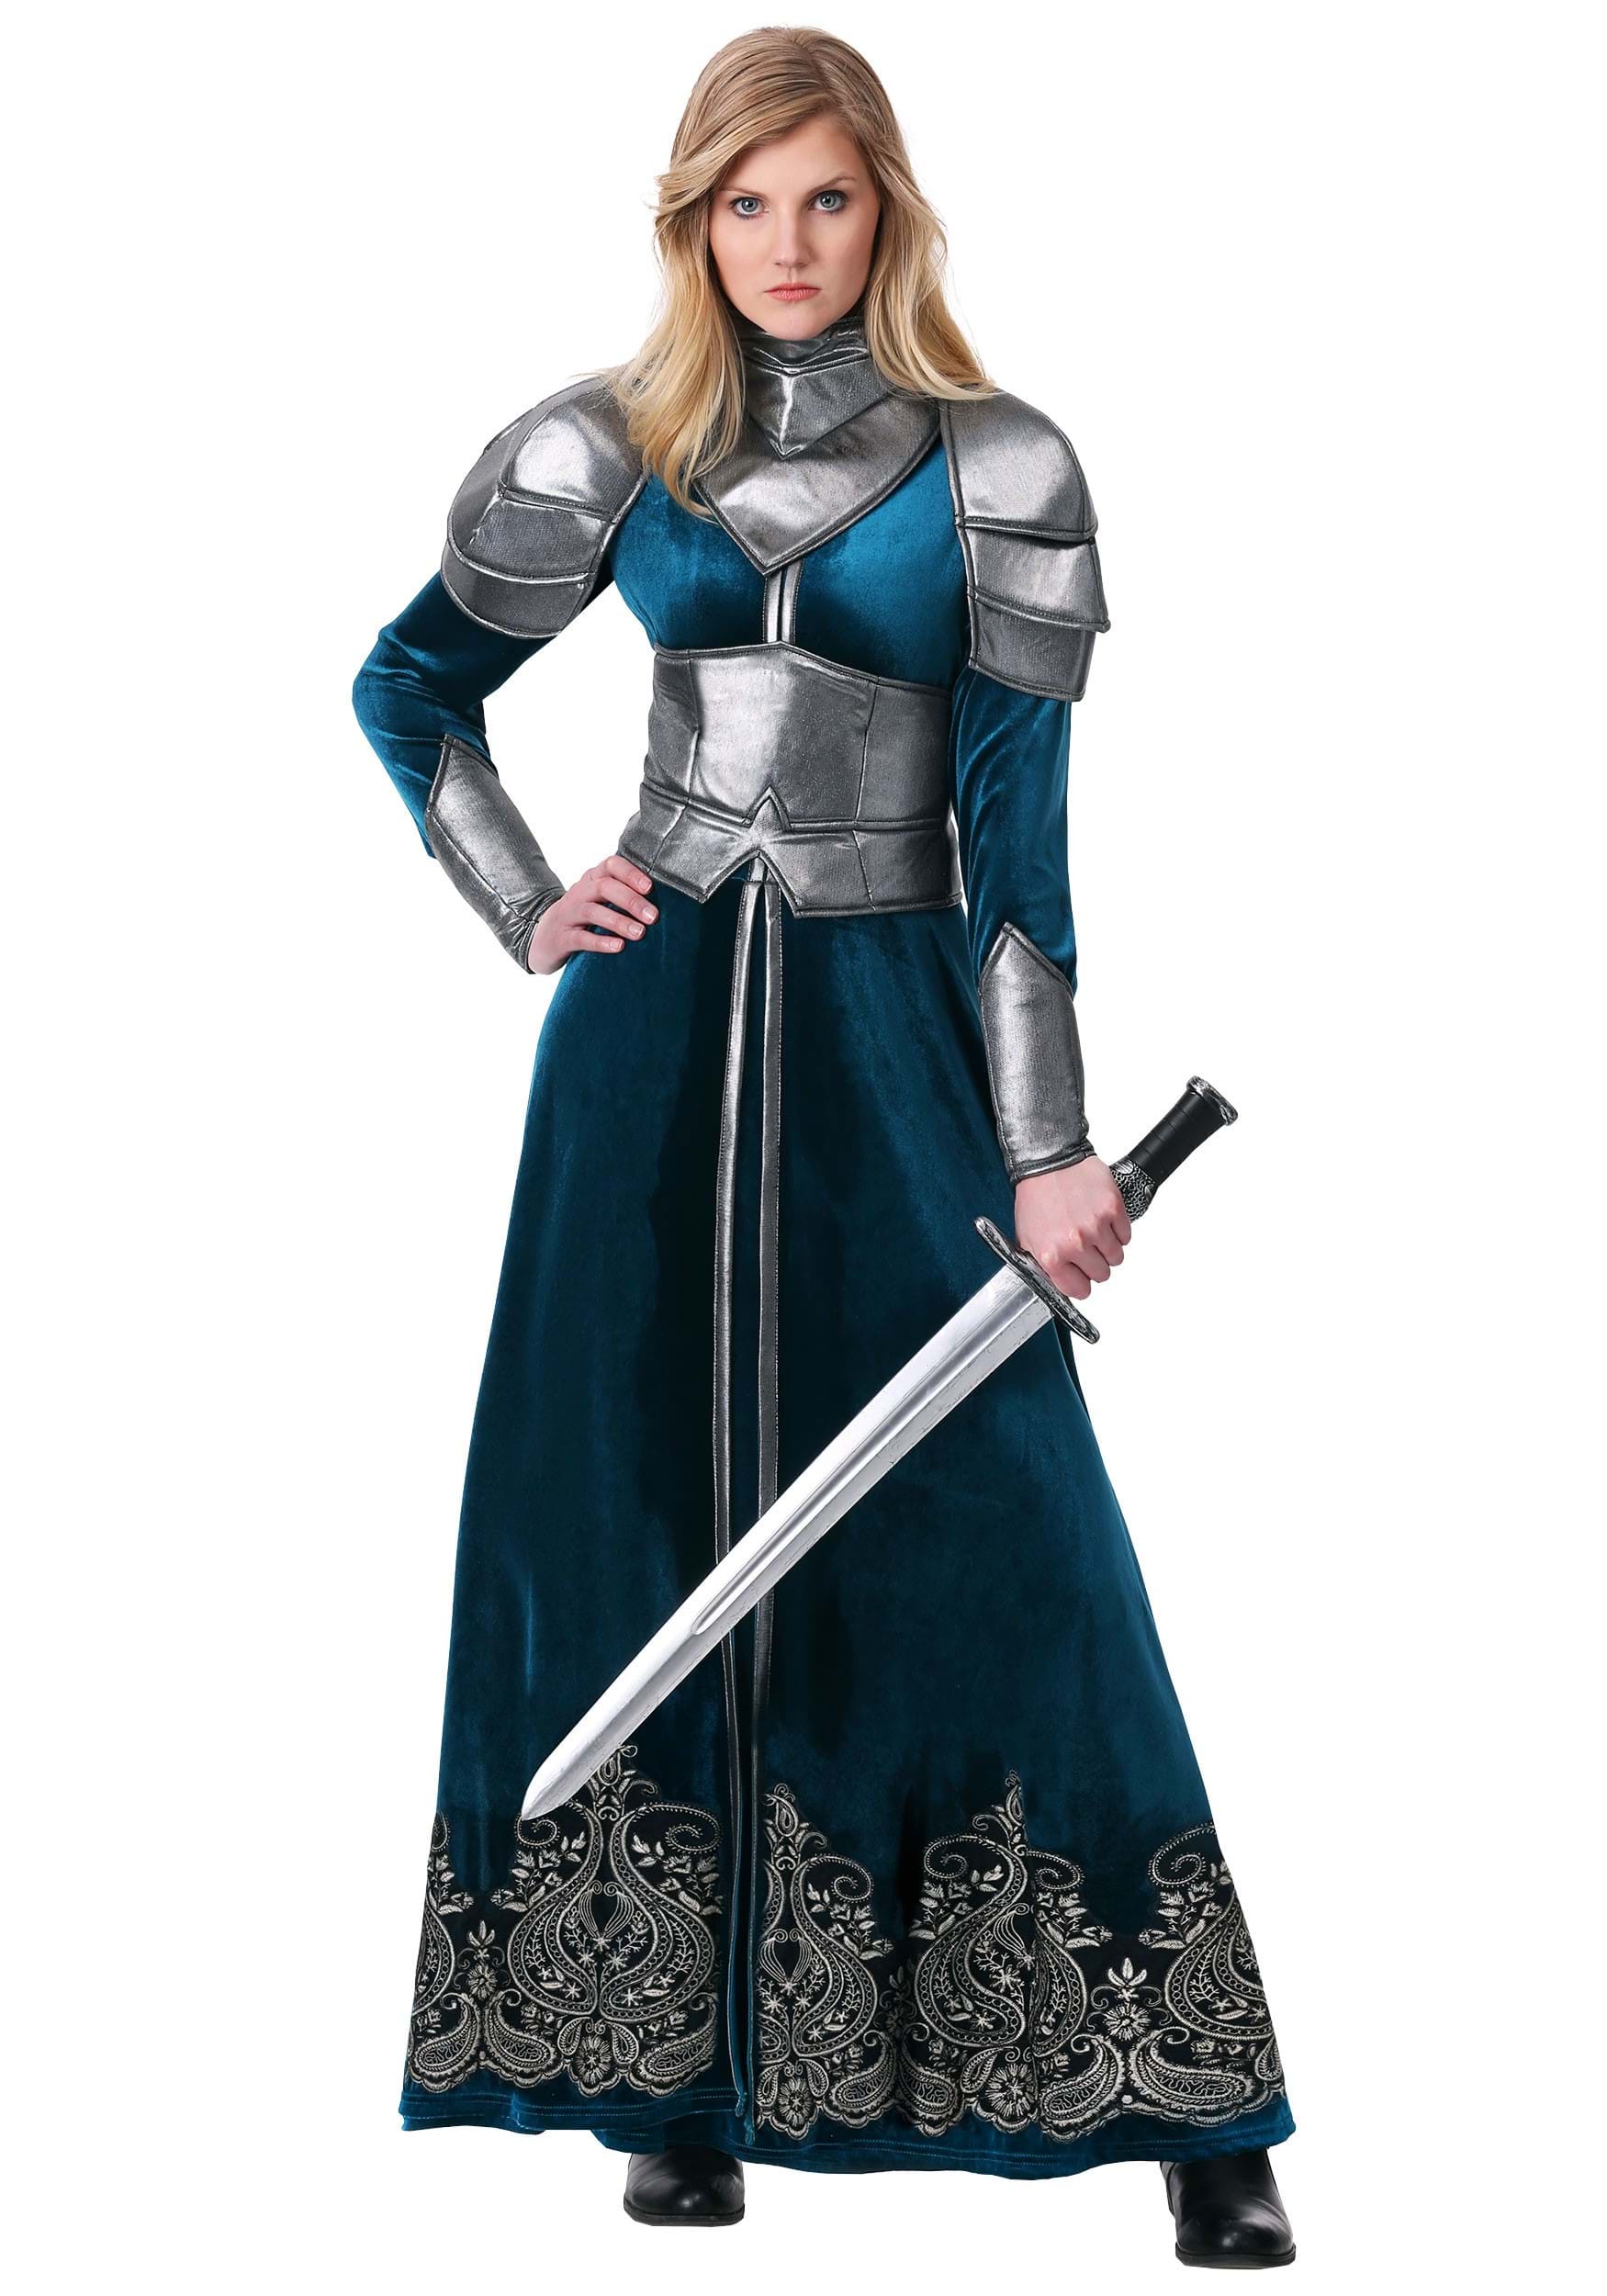 Women’s Medieval Warrior Costume